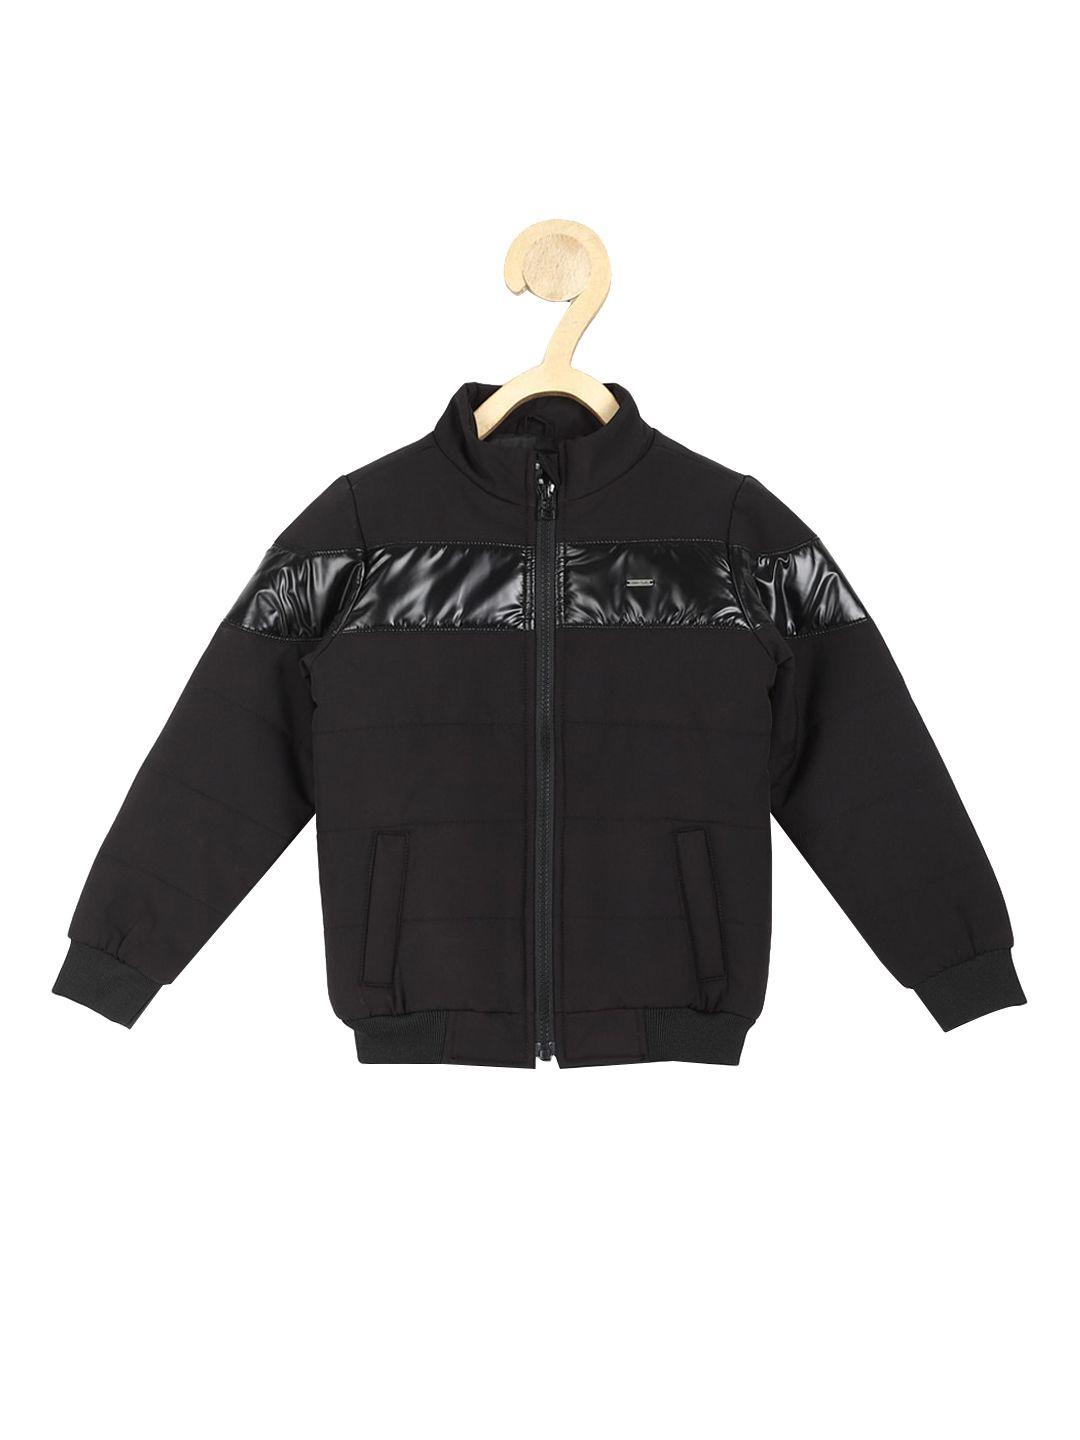 allen solly junior boys black crop puffer jacket